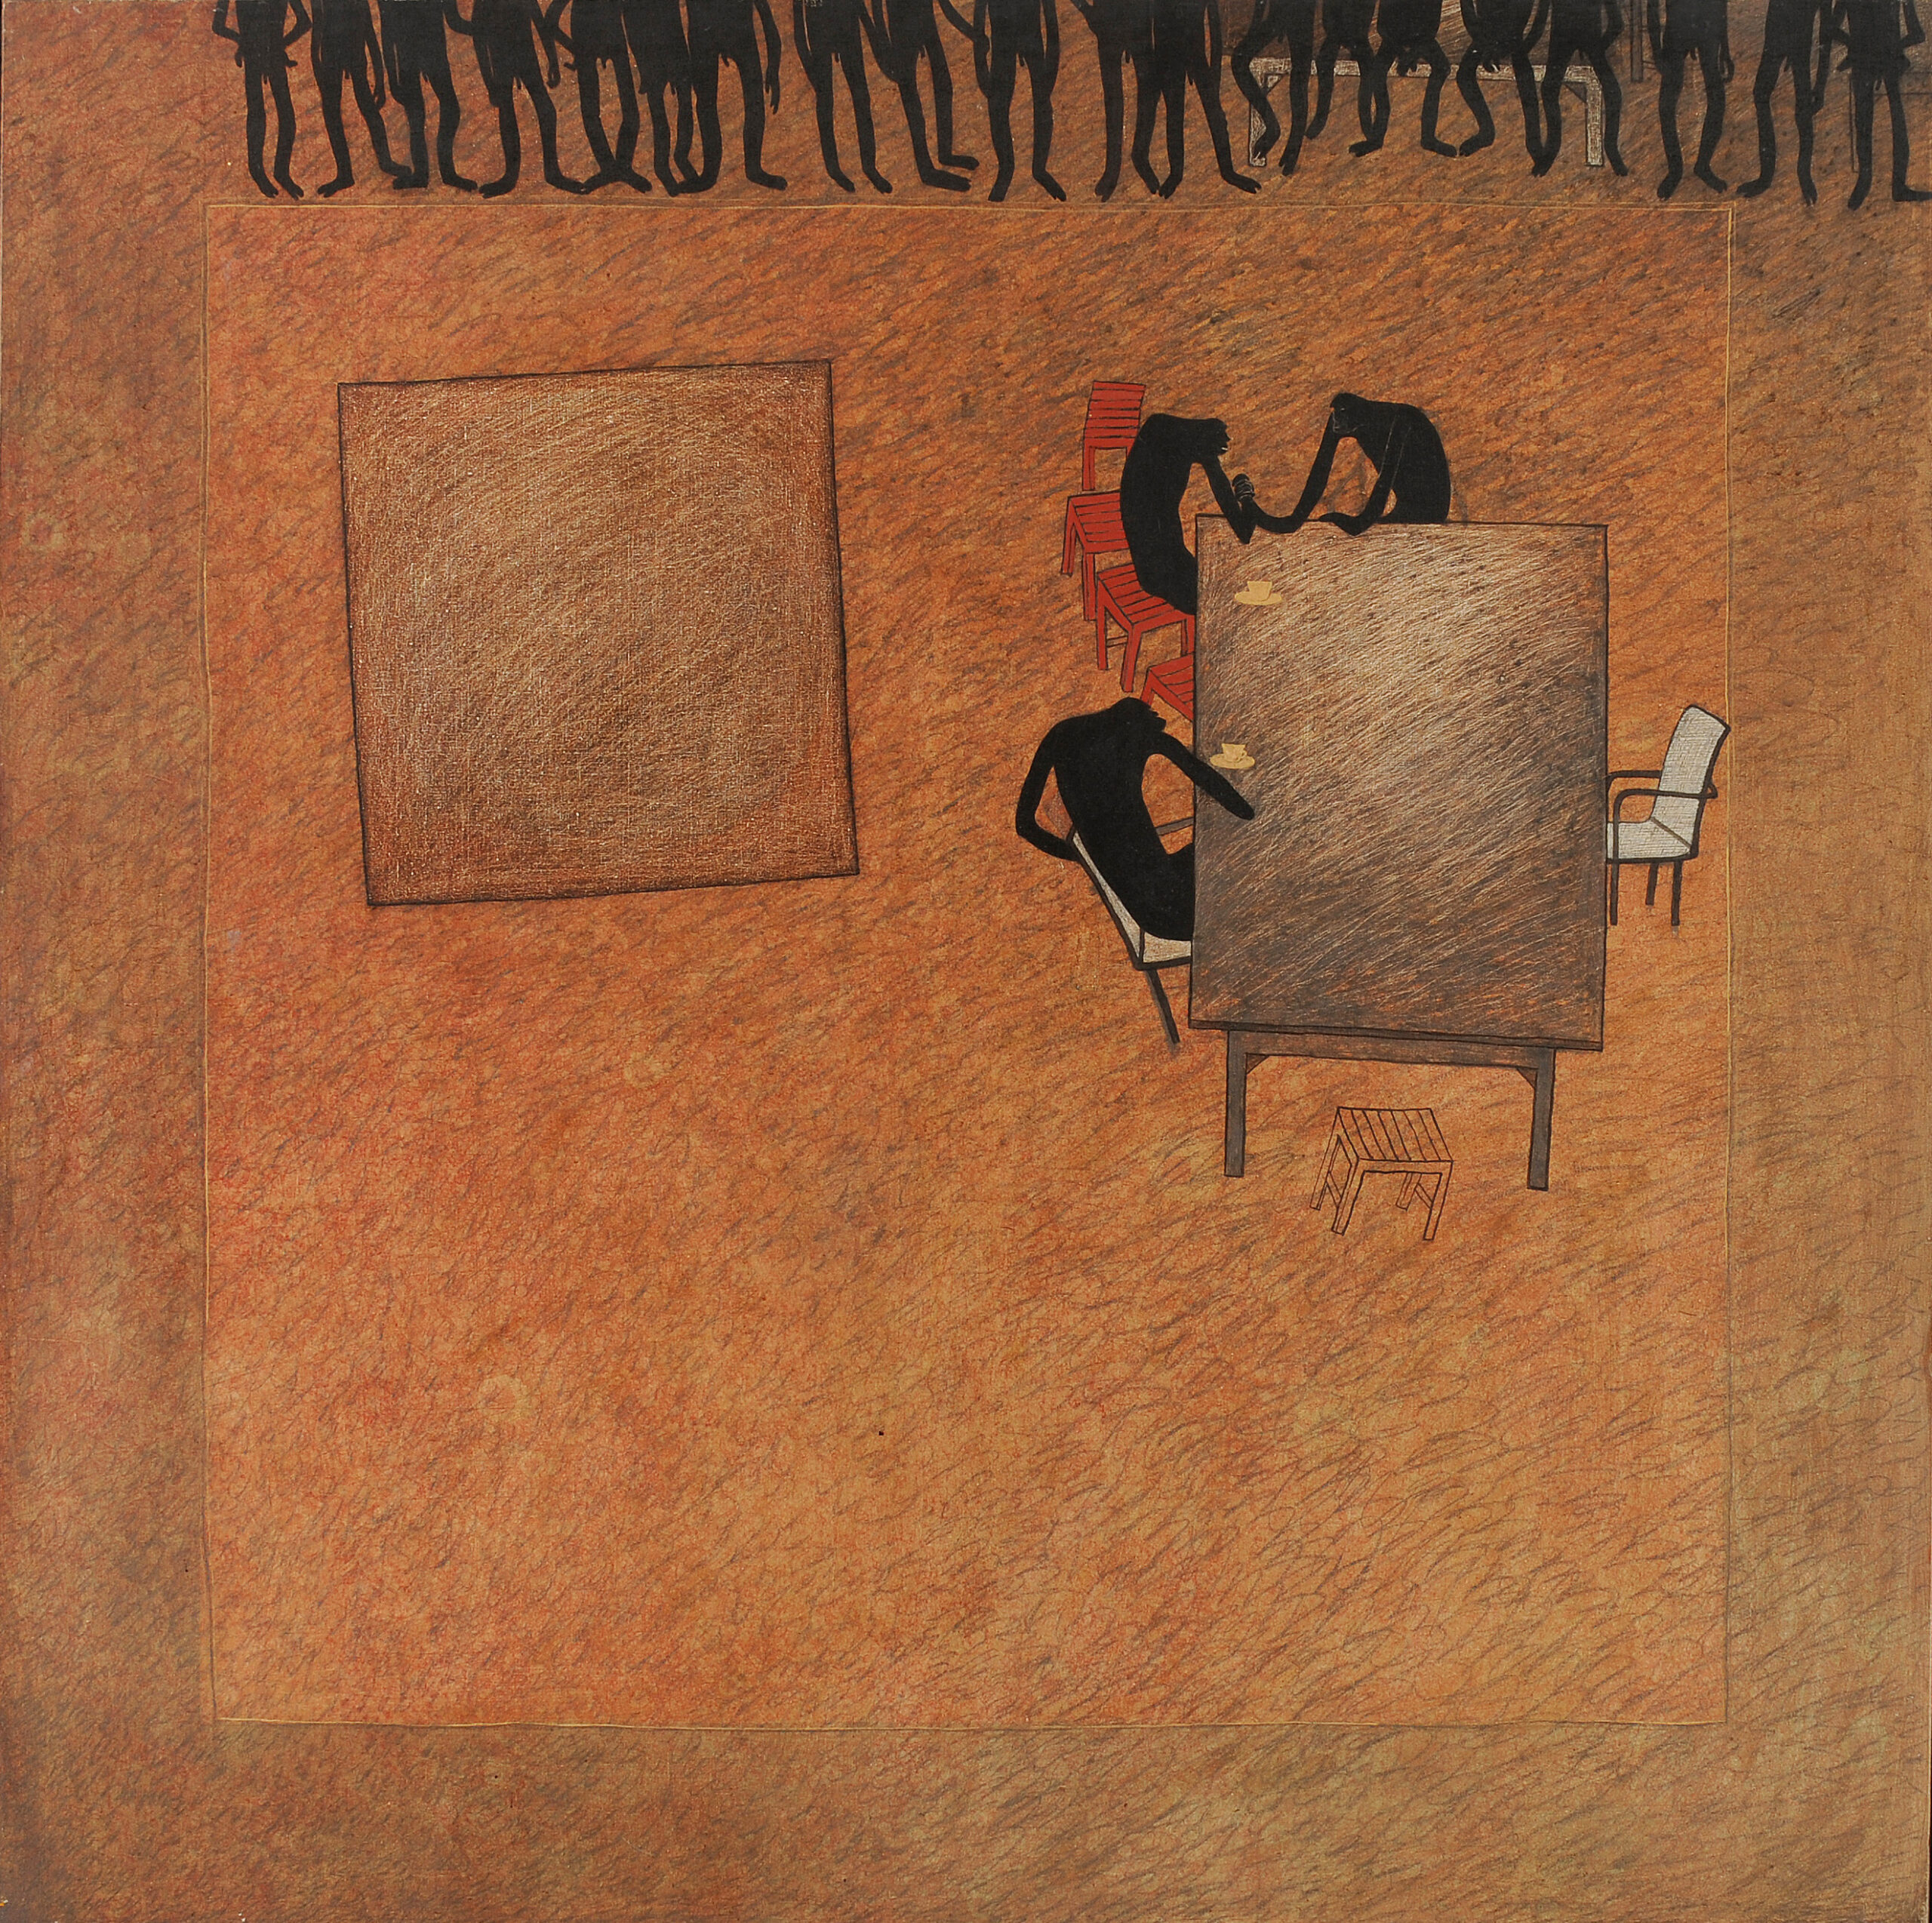 RAMESHWAR BROOTA, The Spectators, Acrylic on canvas, 1978, 55 x 55 in.